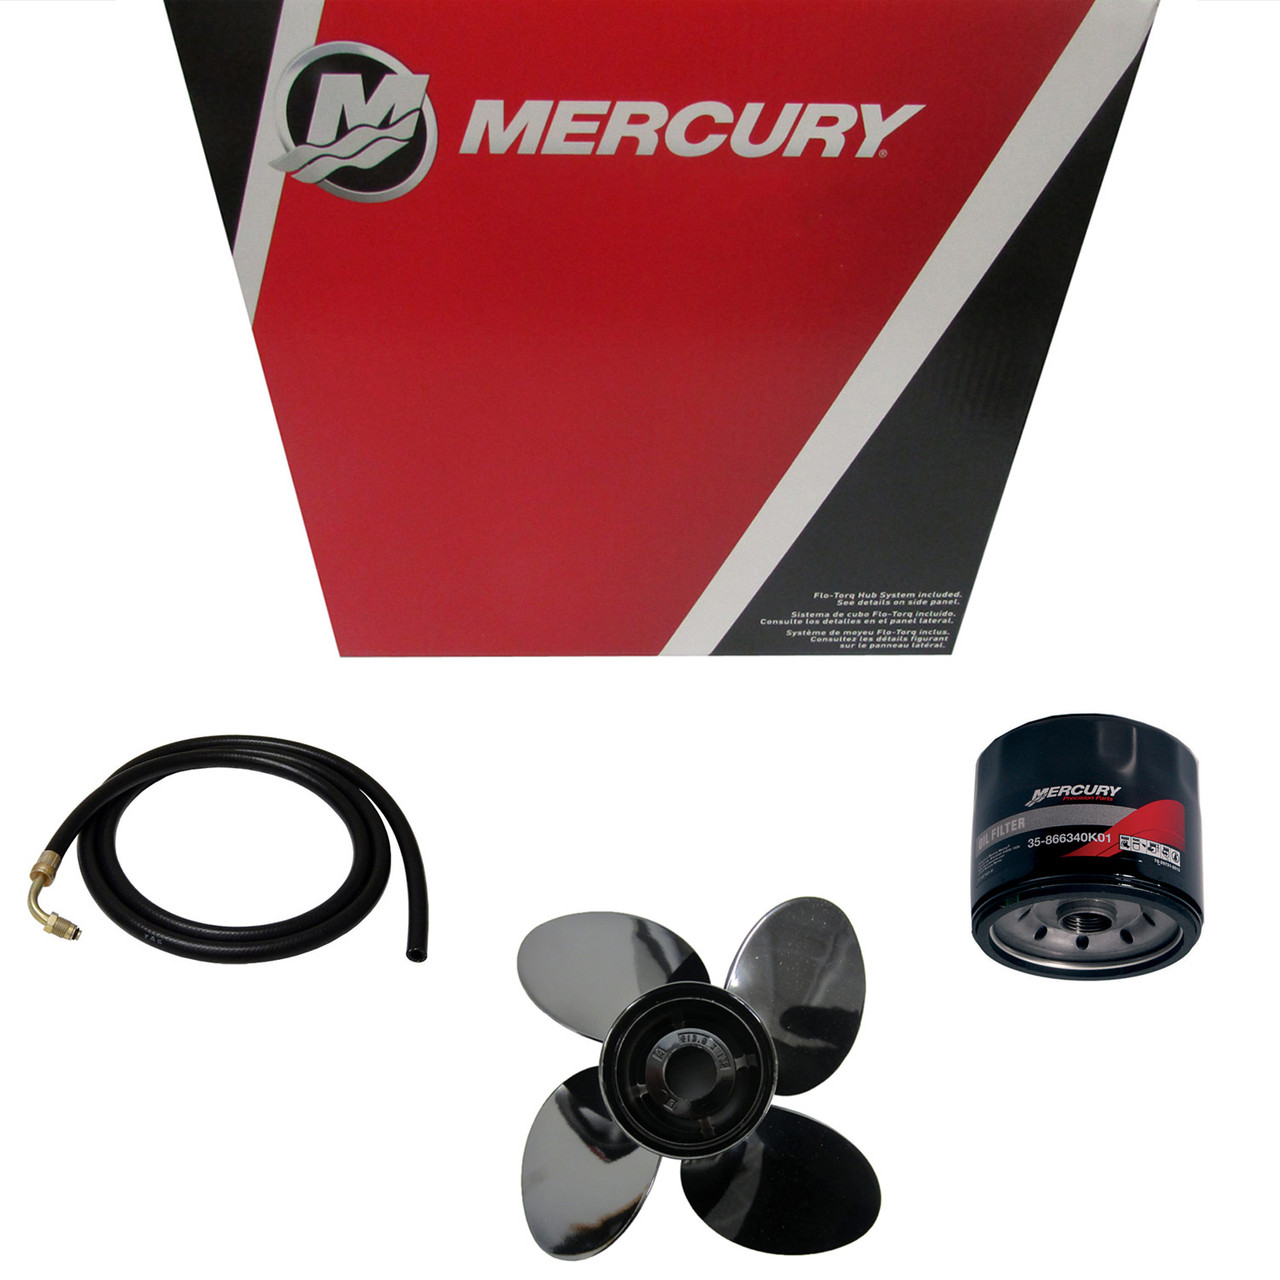 Mercury Marine / Mercruiser New OEM Gasket Set, 27-859352A01